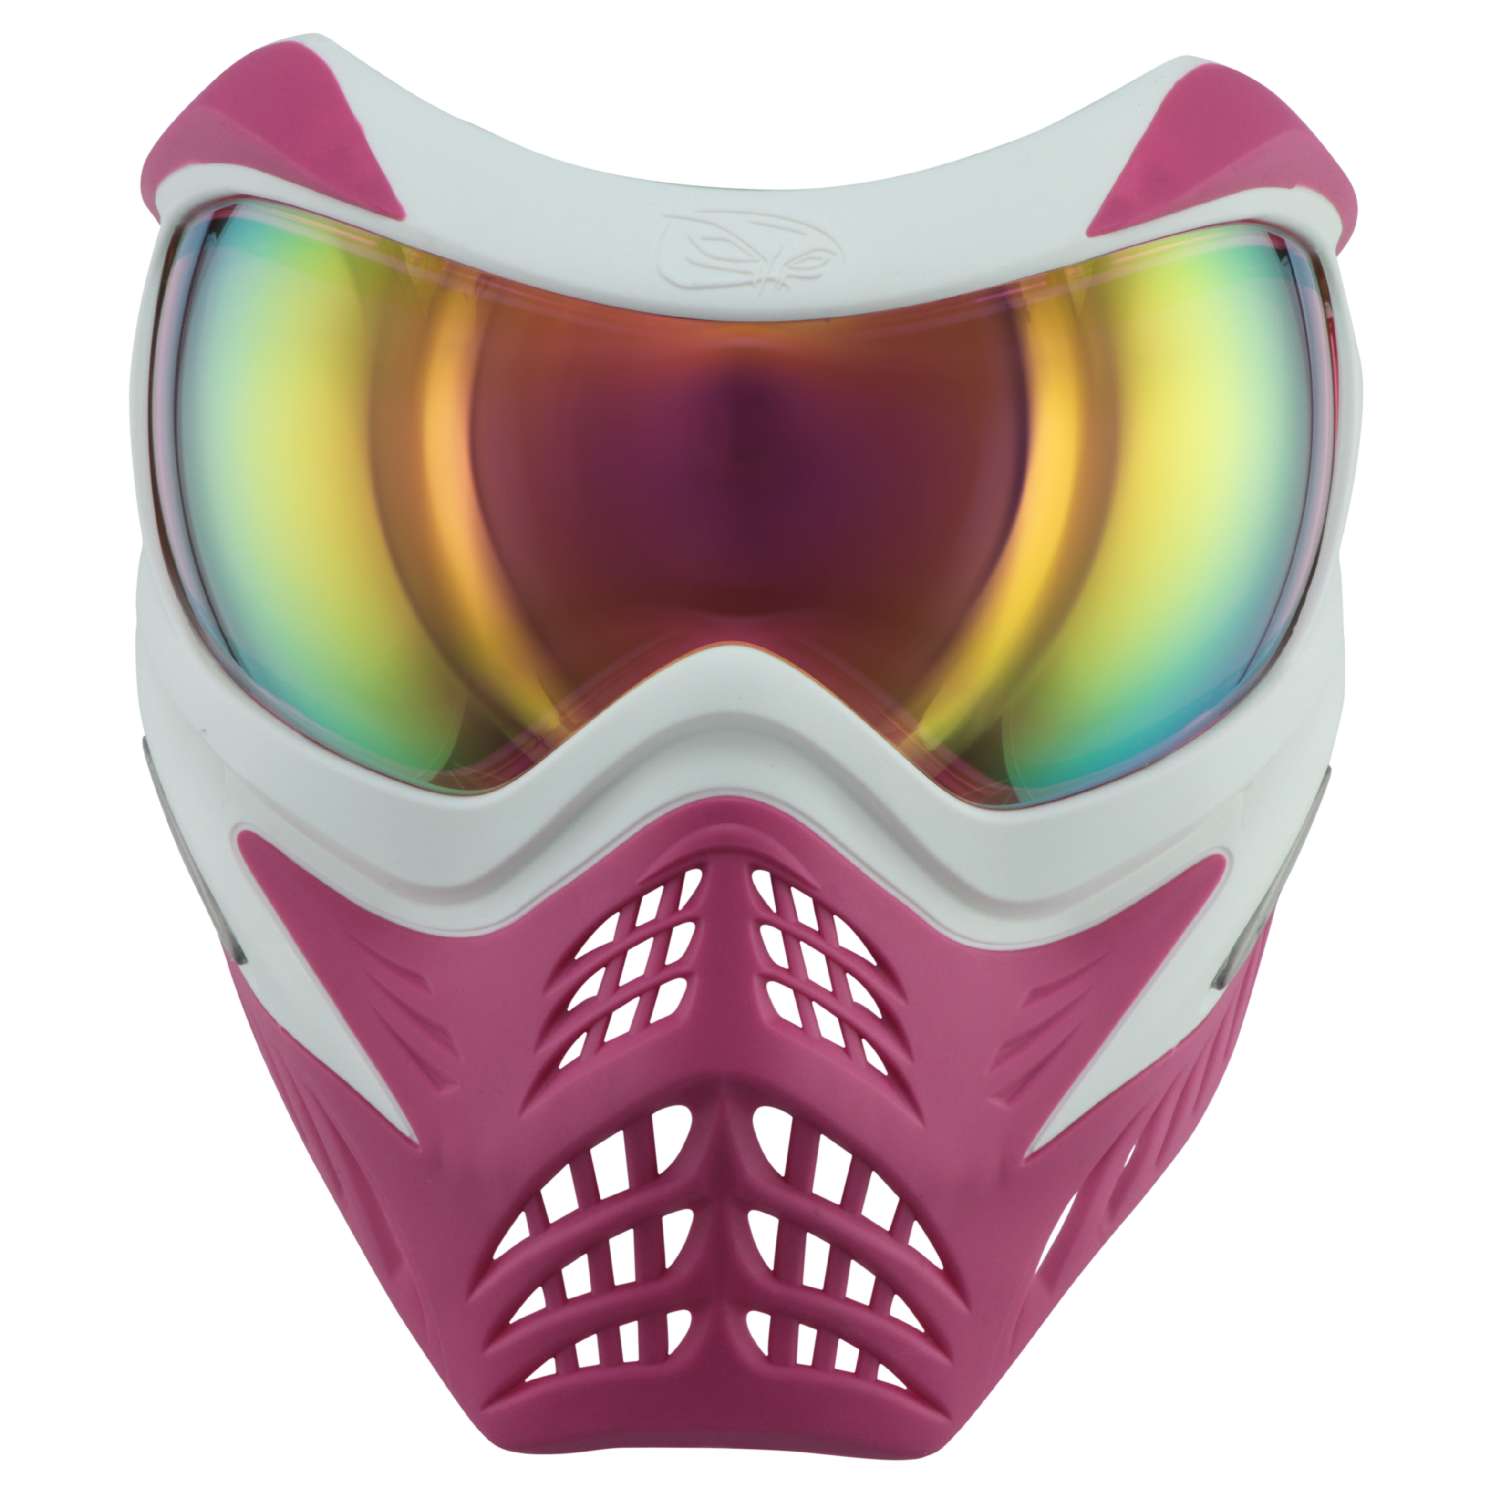 V-Force Grill Paintball Mask Se - Pink Warrior (Breast Cancer Awareness)